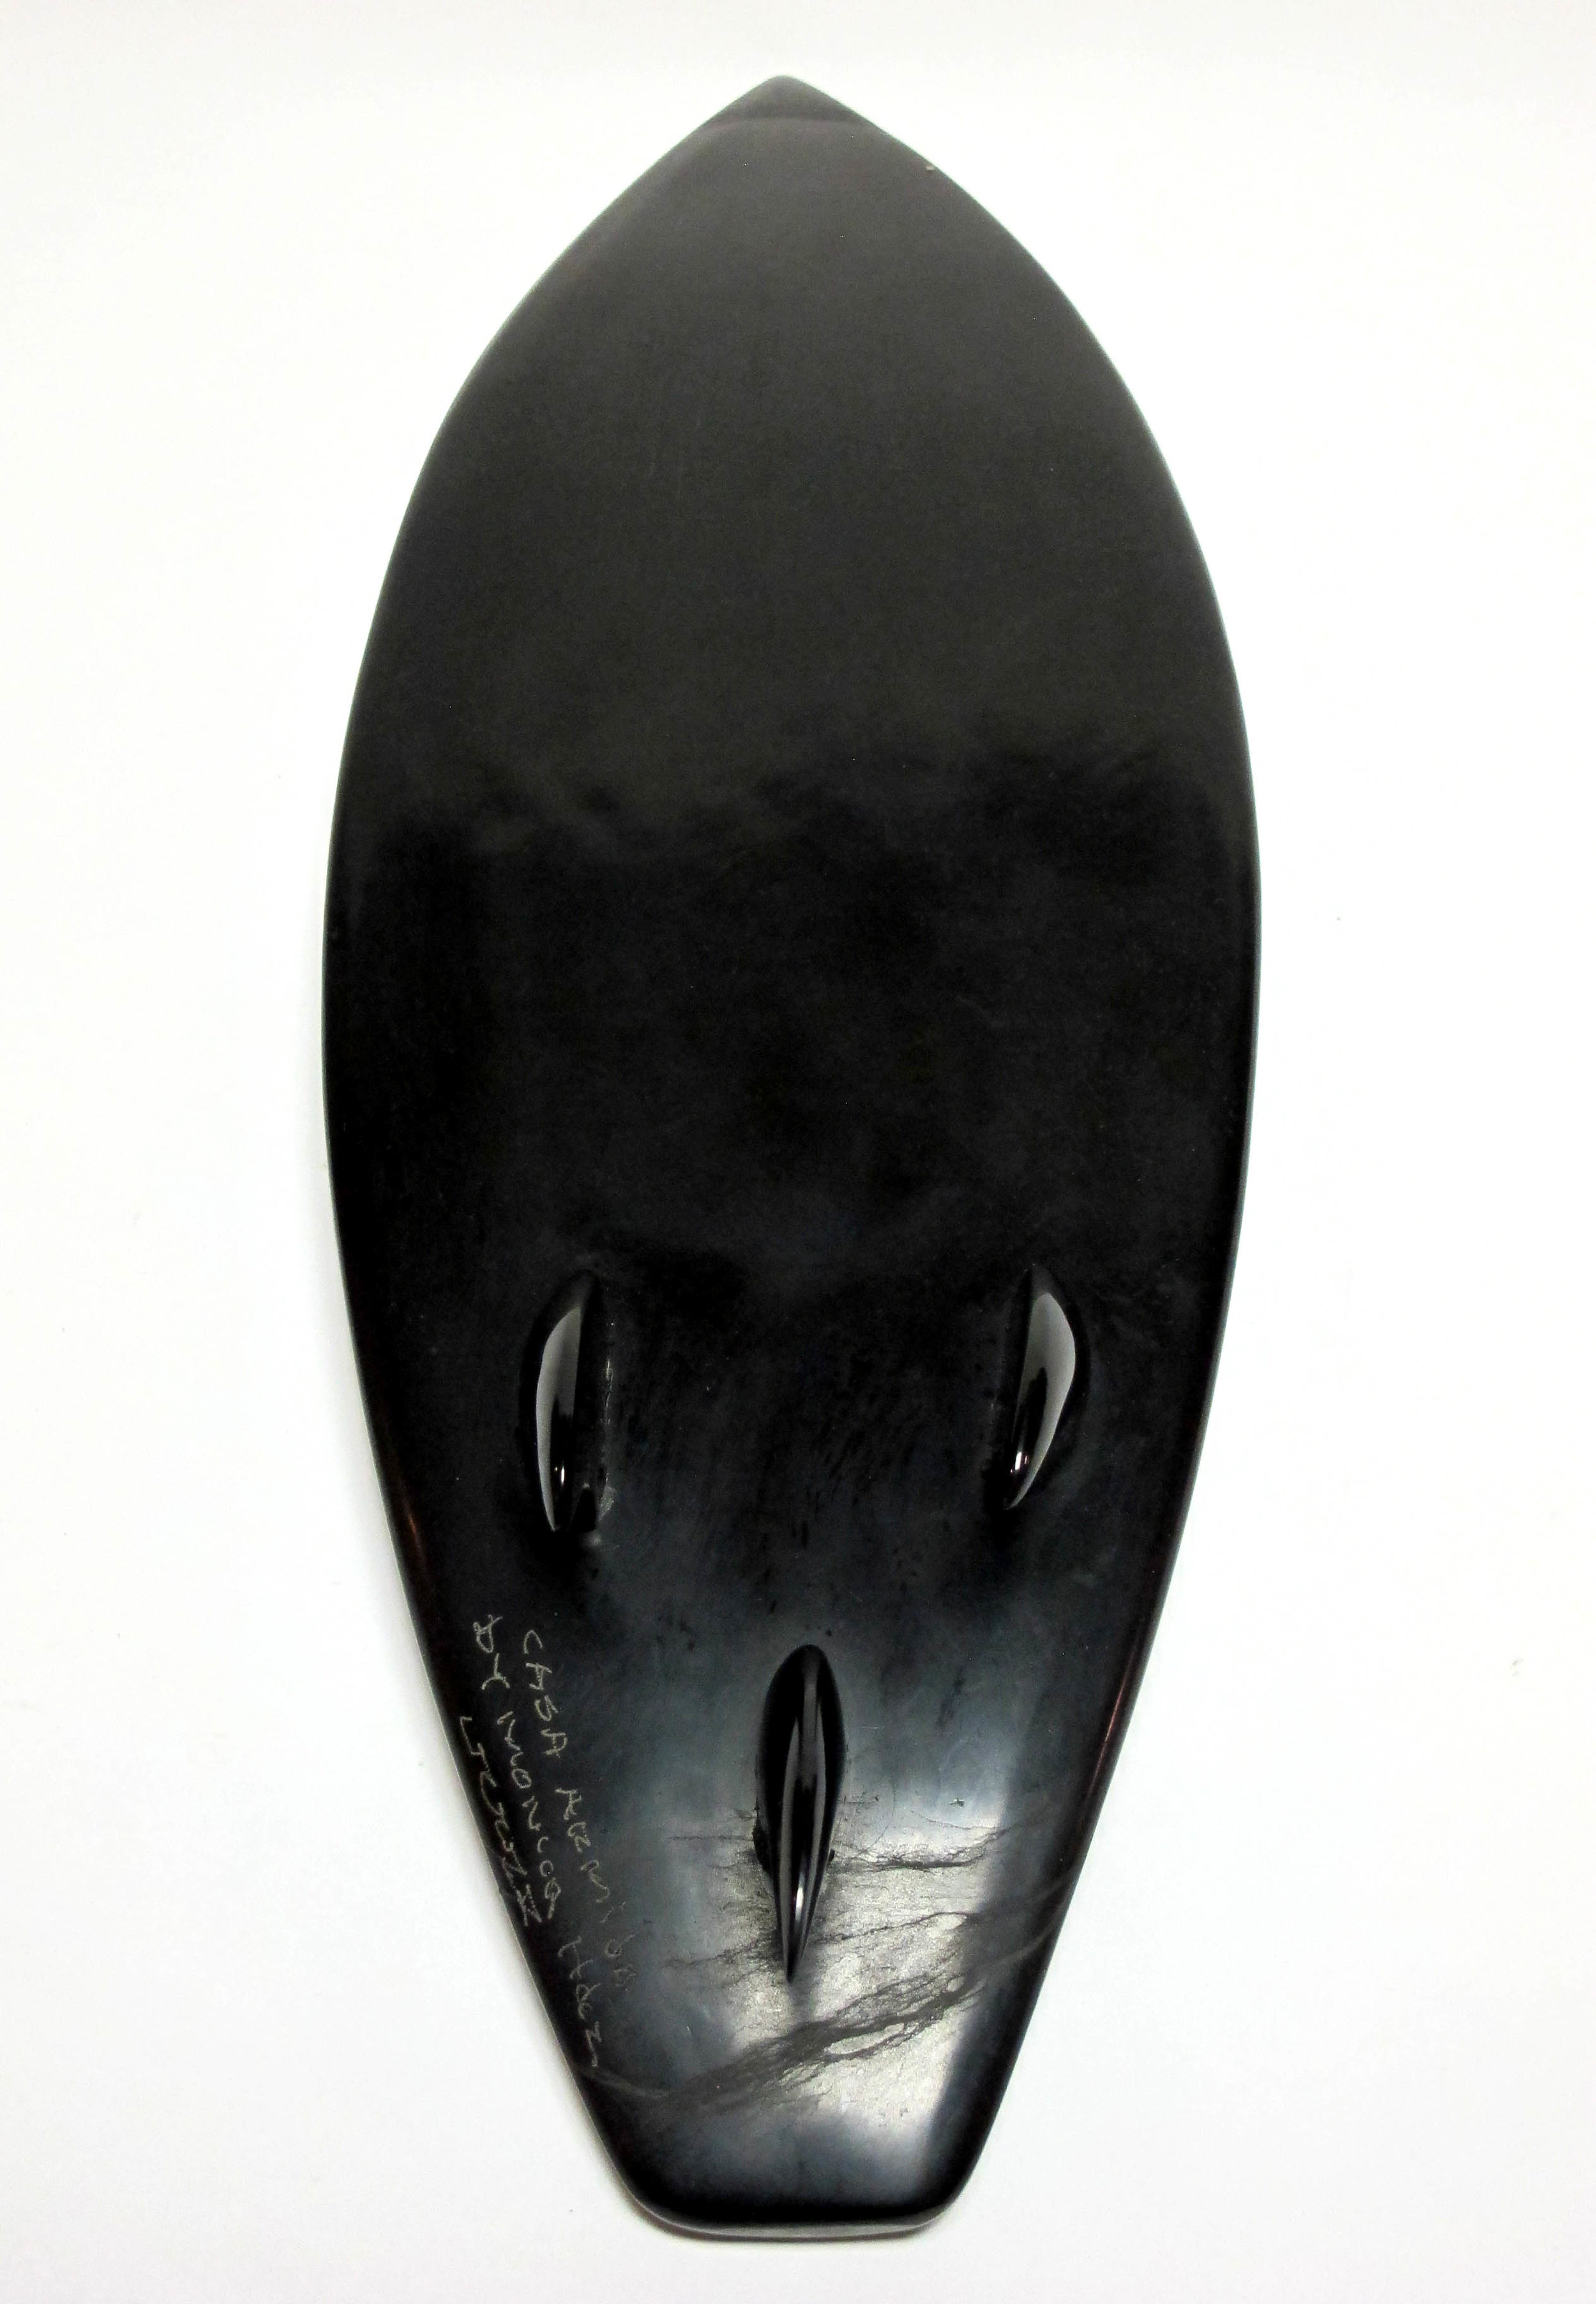 KL_Surfboard Small_black marble7.jpg